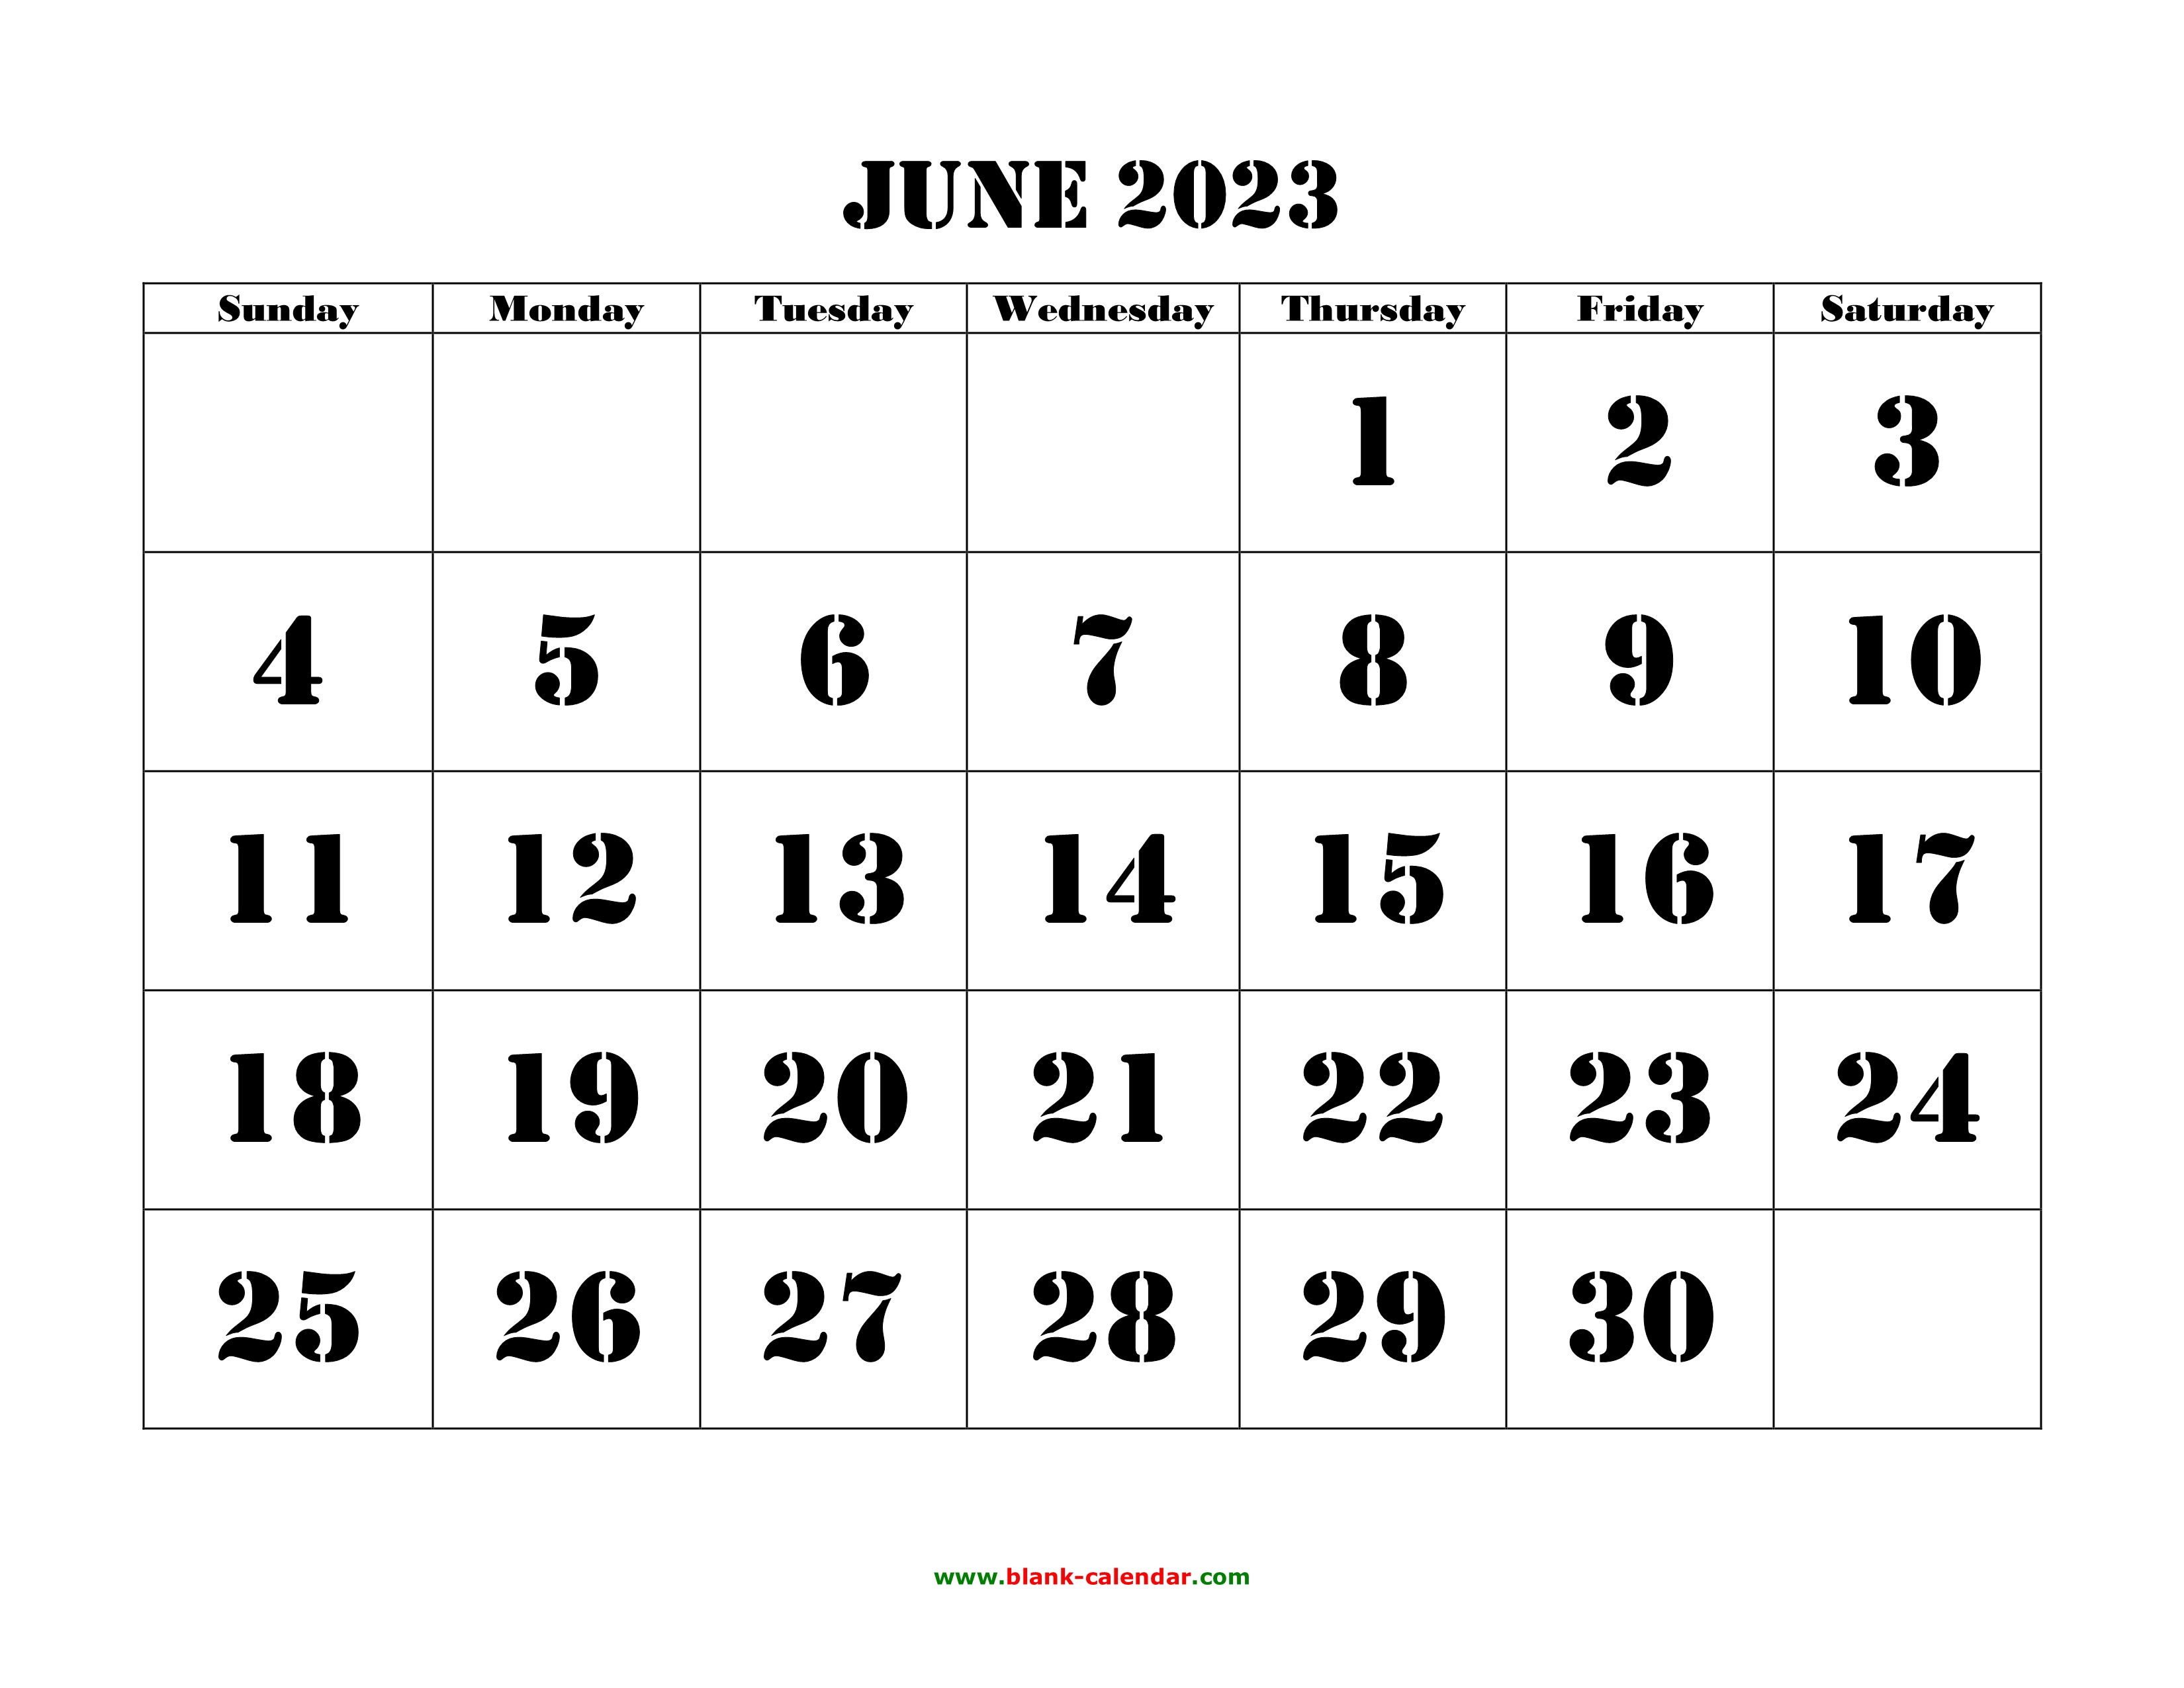 large-print-calendar-june-2023-get-calendar-2023-update